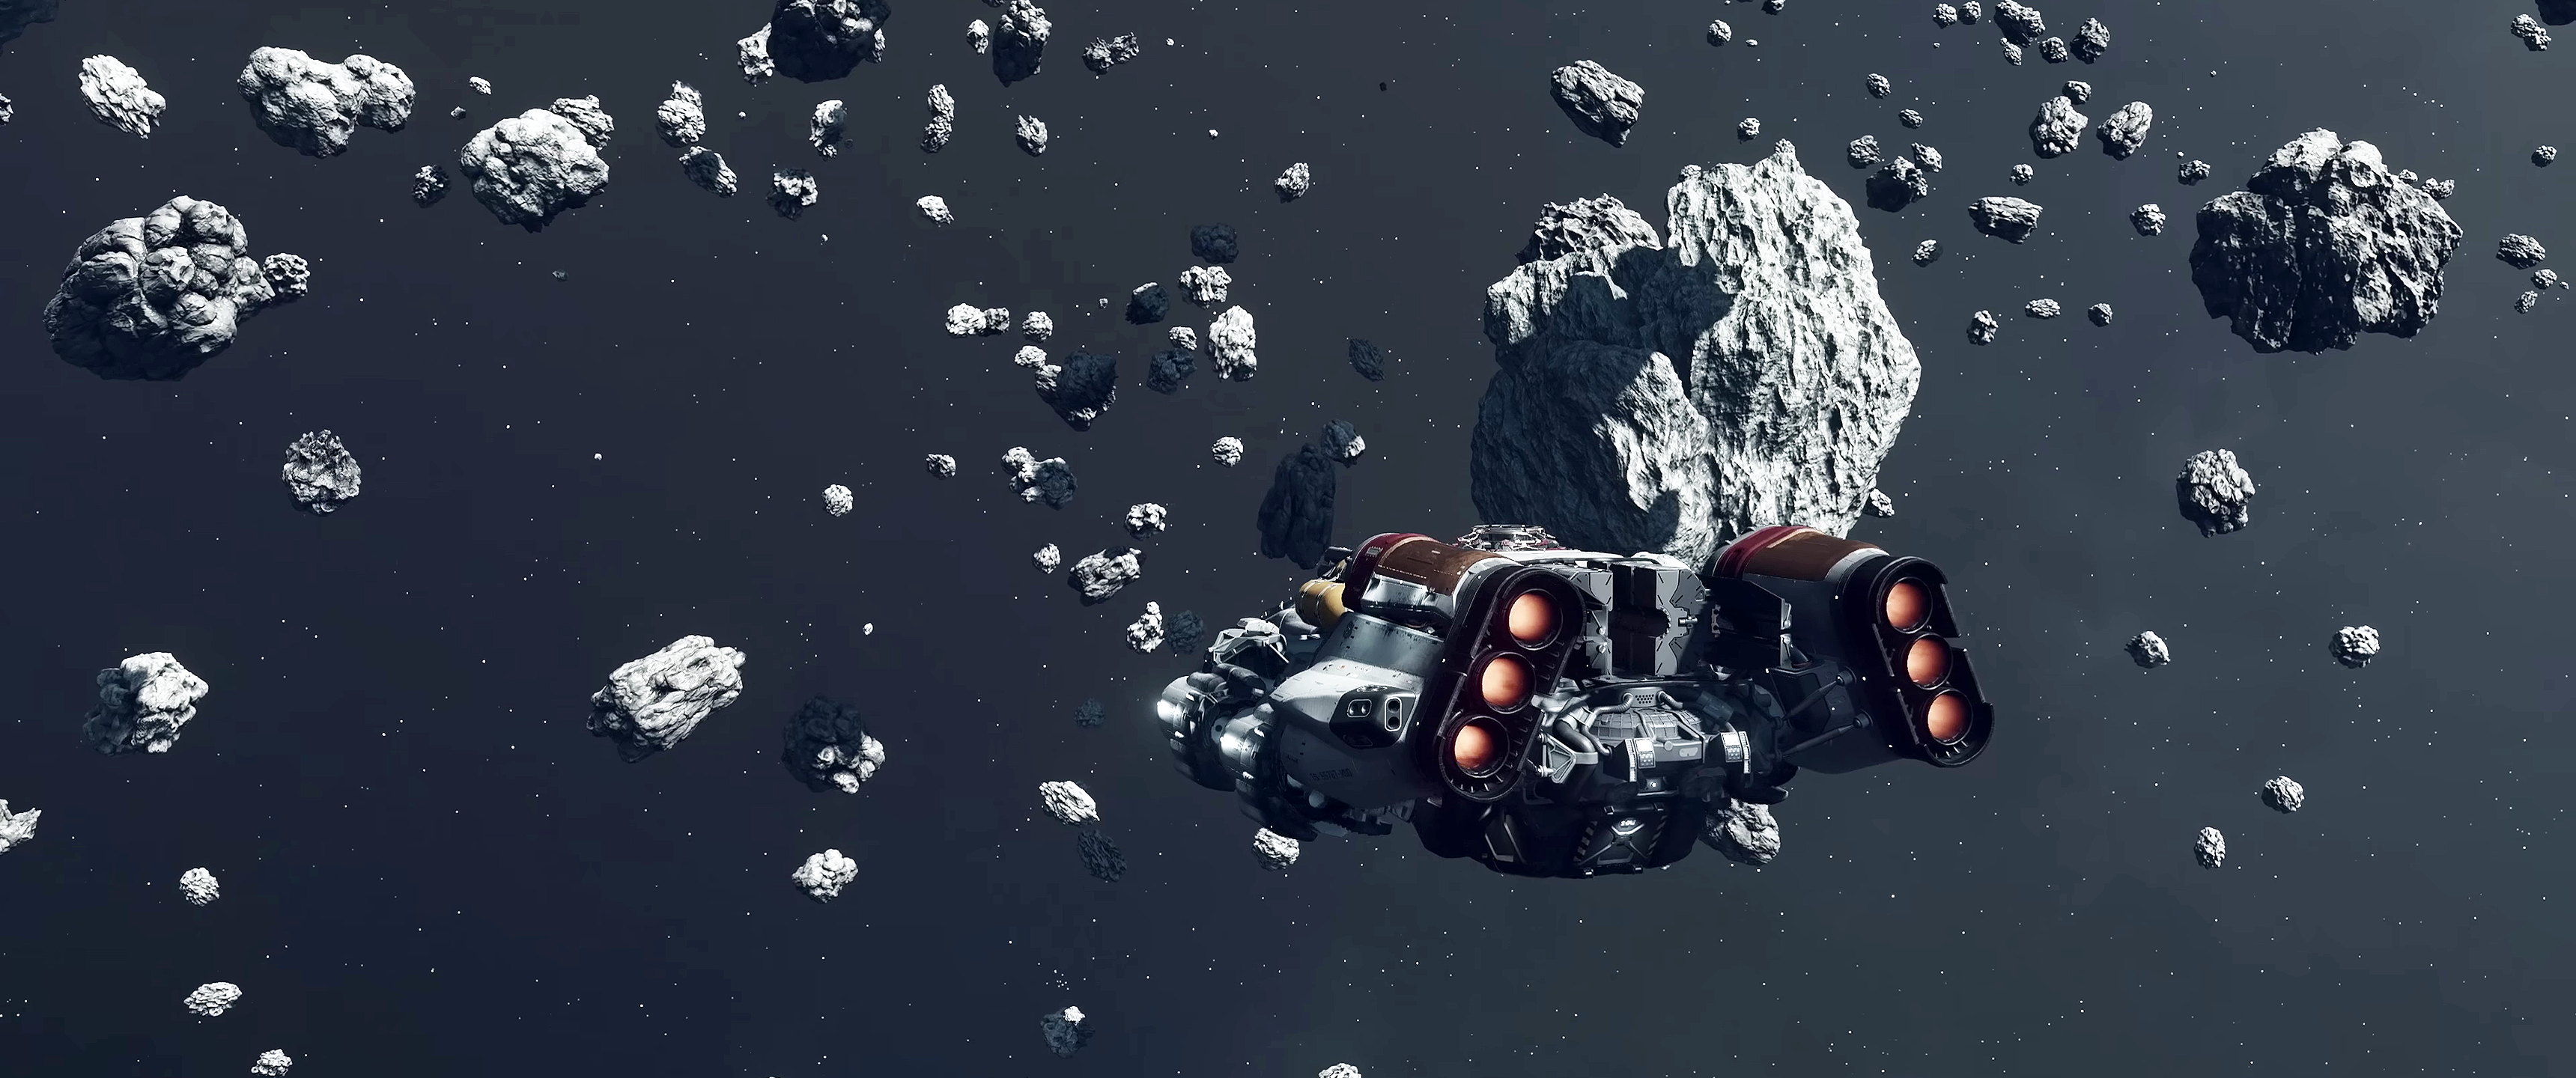 Starfield Bethesda Softworks Space Video Games Spaceship Asteroid Stars CGi 3440x1440